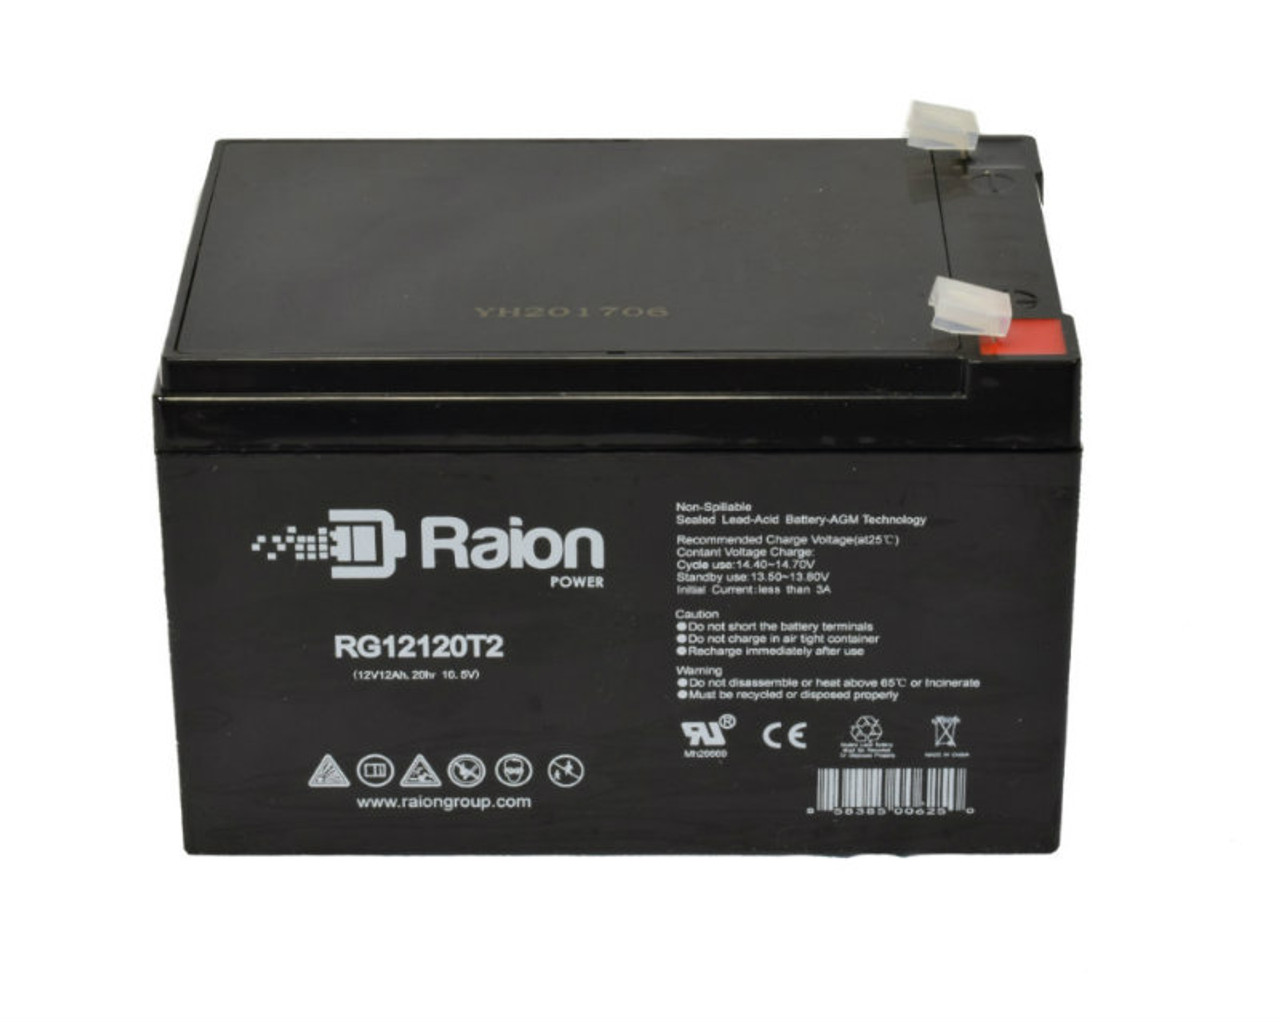 Raion Power RG12120T2 SLA Battery for TLV12120F2